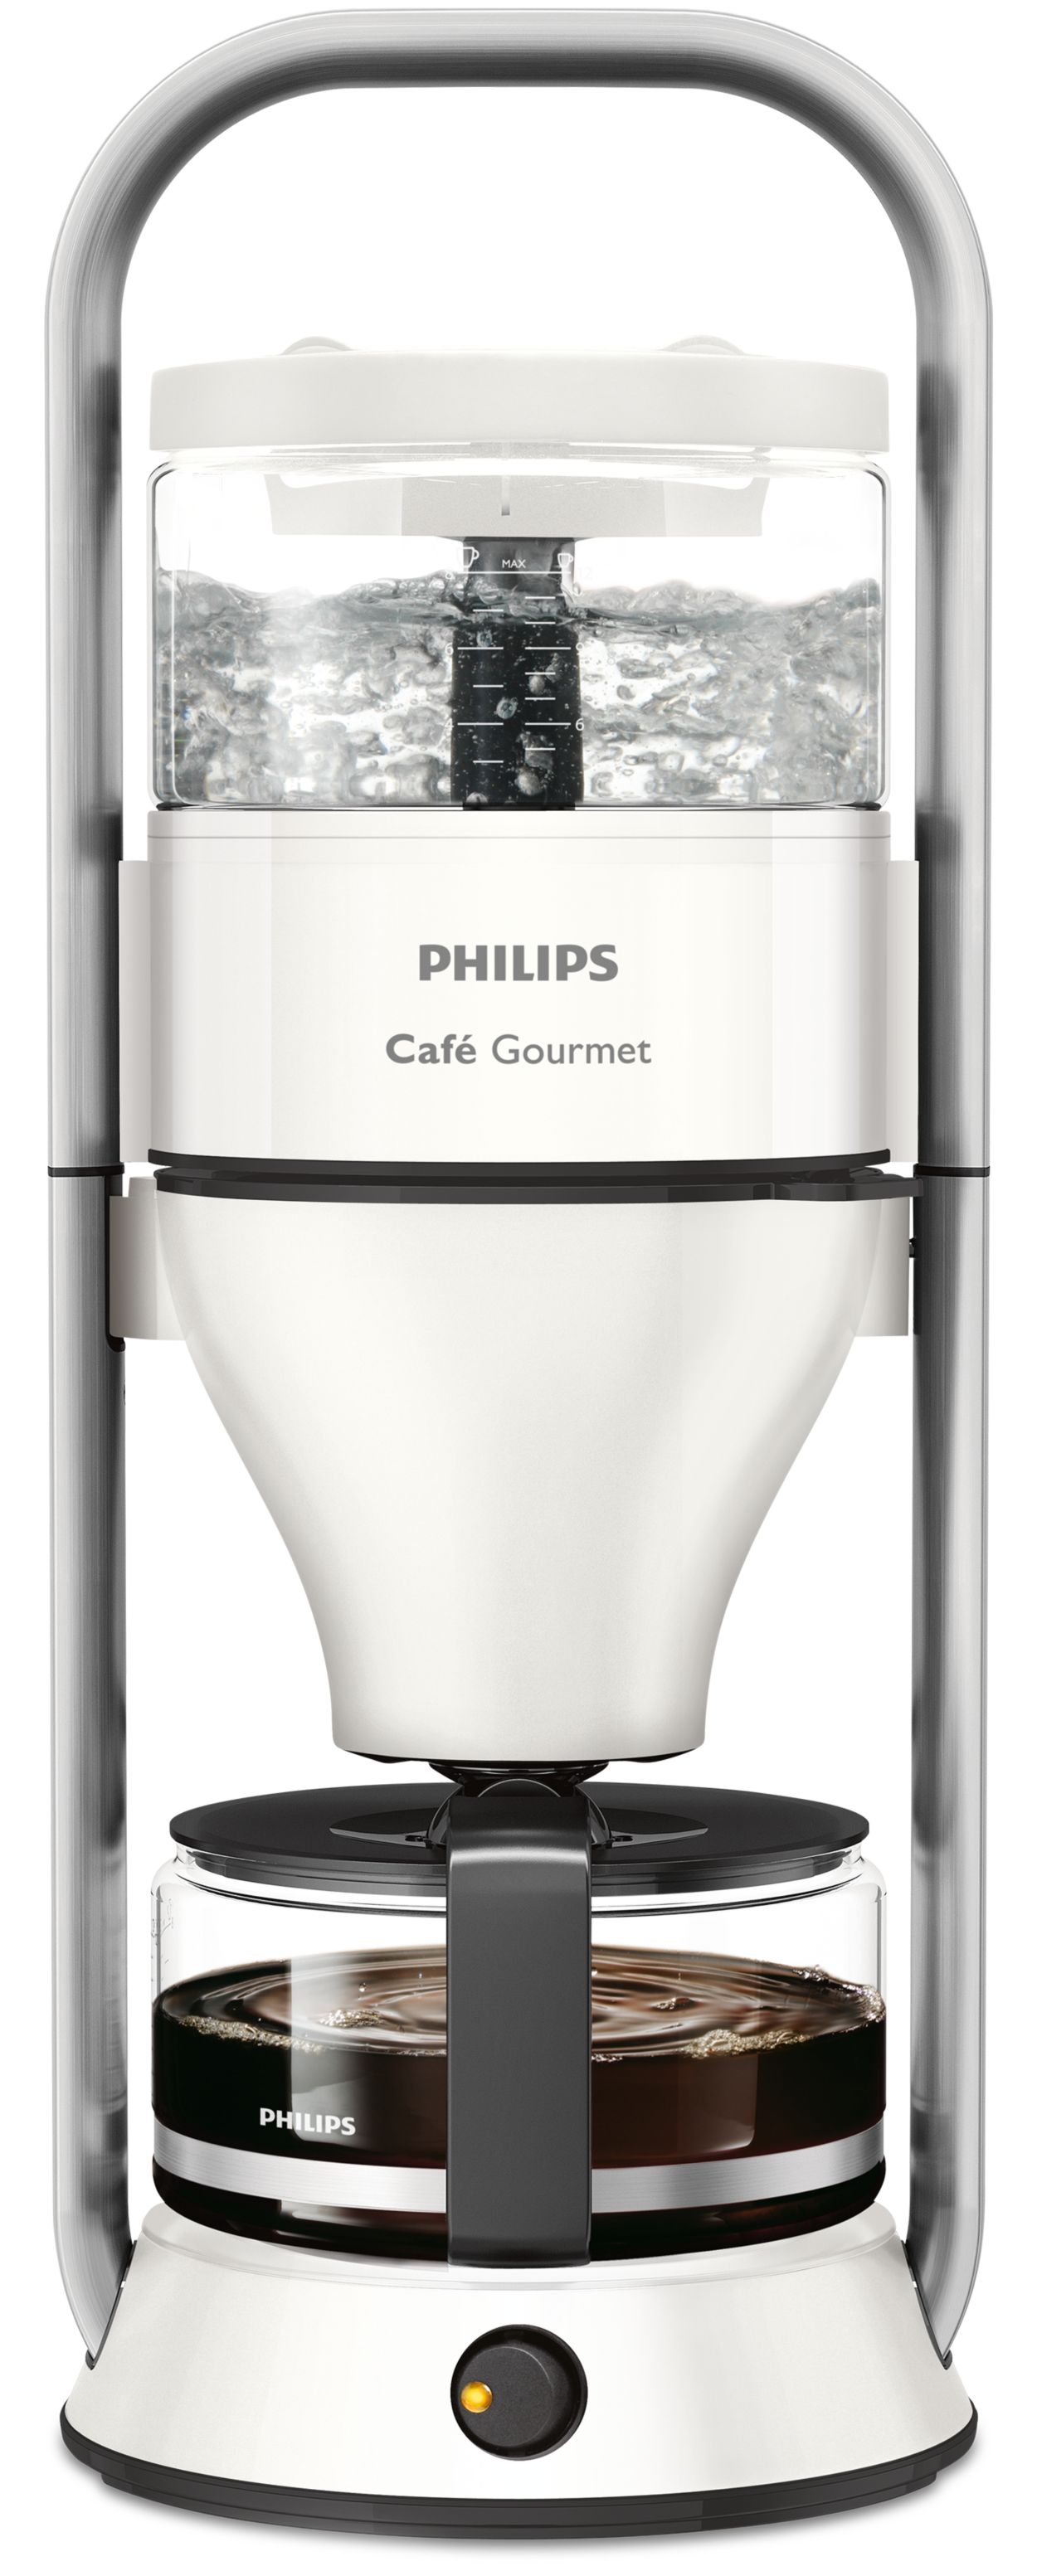 Philips Café Gourmet in edlem Kupfer-Metallic – Haus & Garten Test